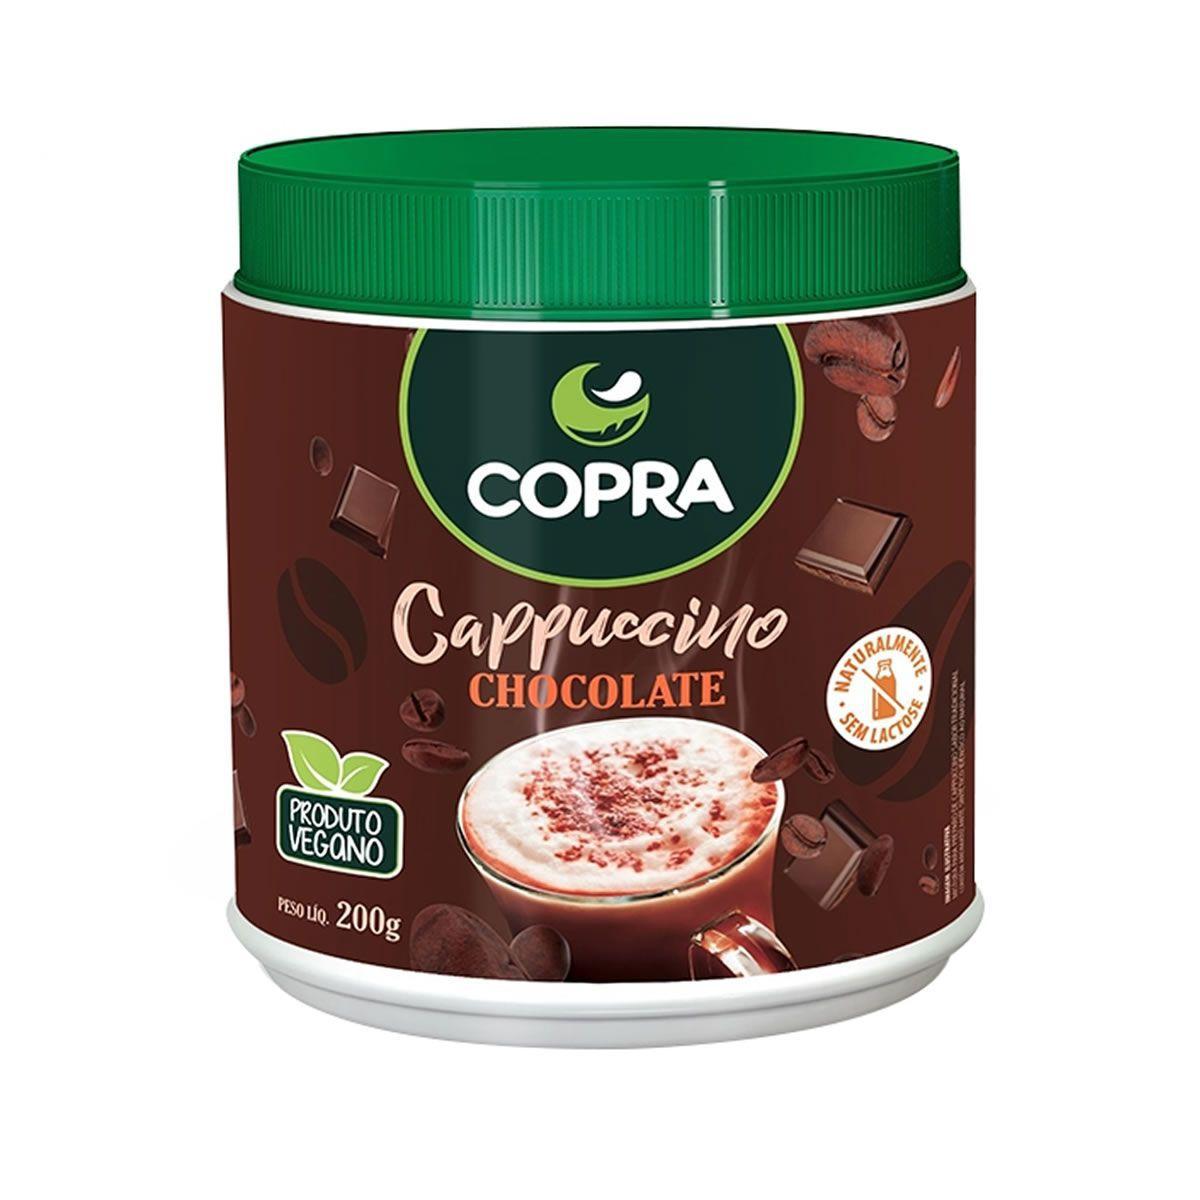 Capuccino Vegano Chocolate Copra 200g